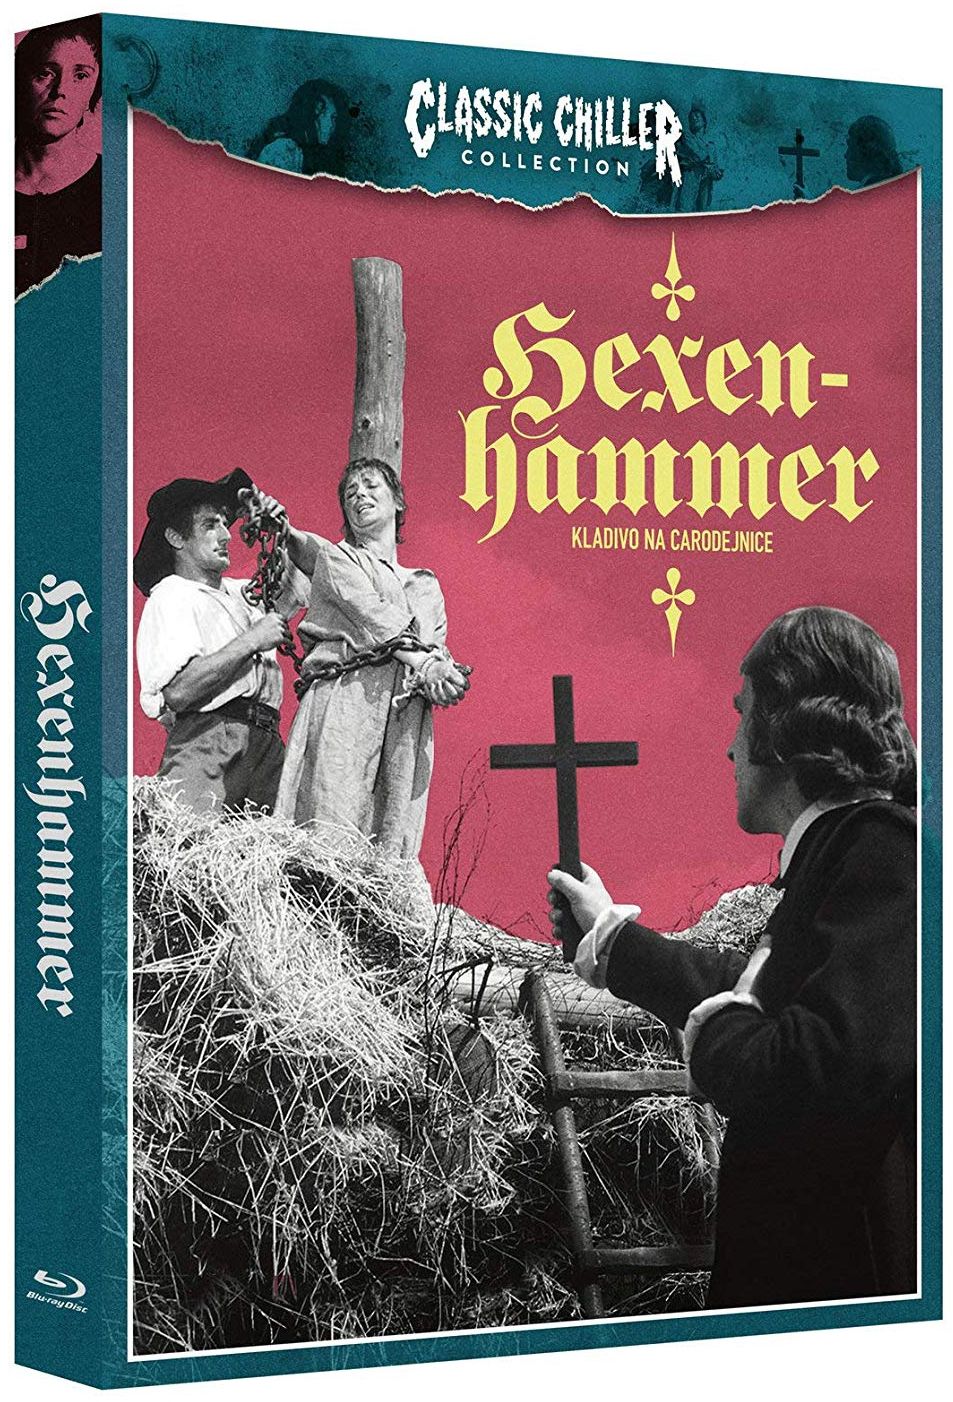 Hexenhammer (Classic Chiller Collection) (3 Discs) (BLURAY)